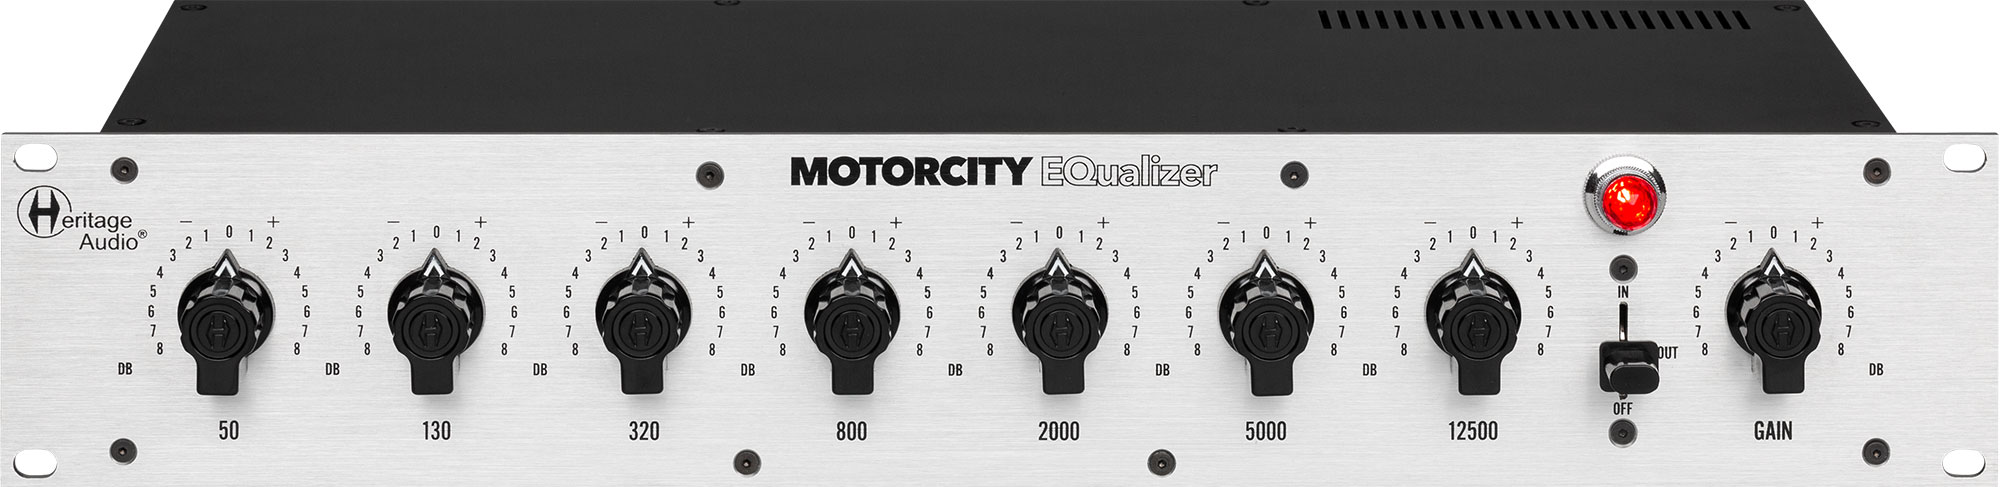 Heritage Audio MOTORCITY EQualizer - Gearlounge